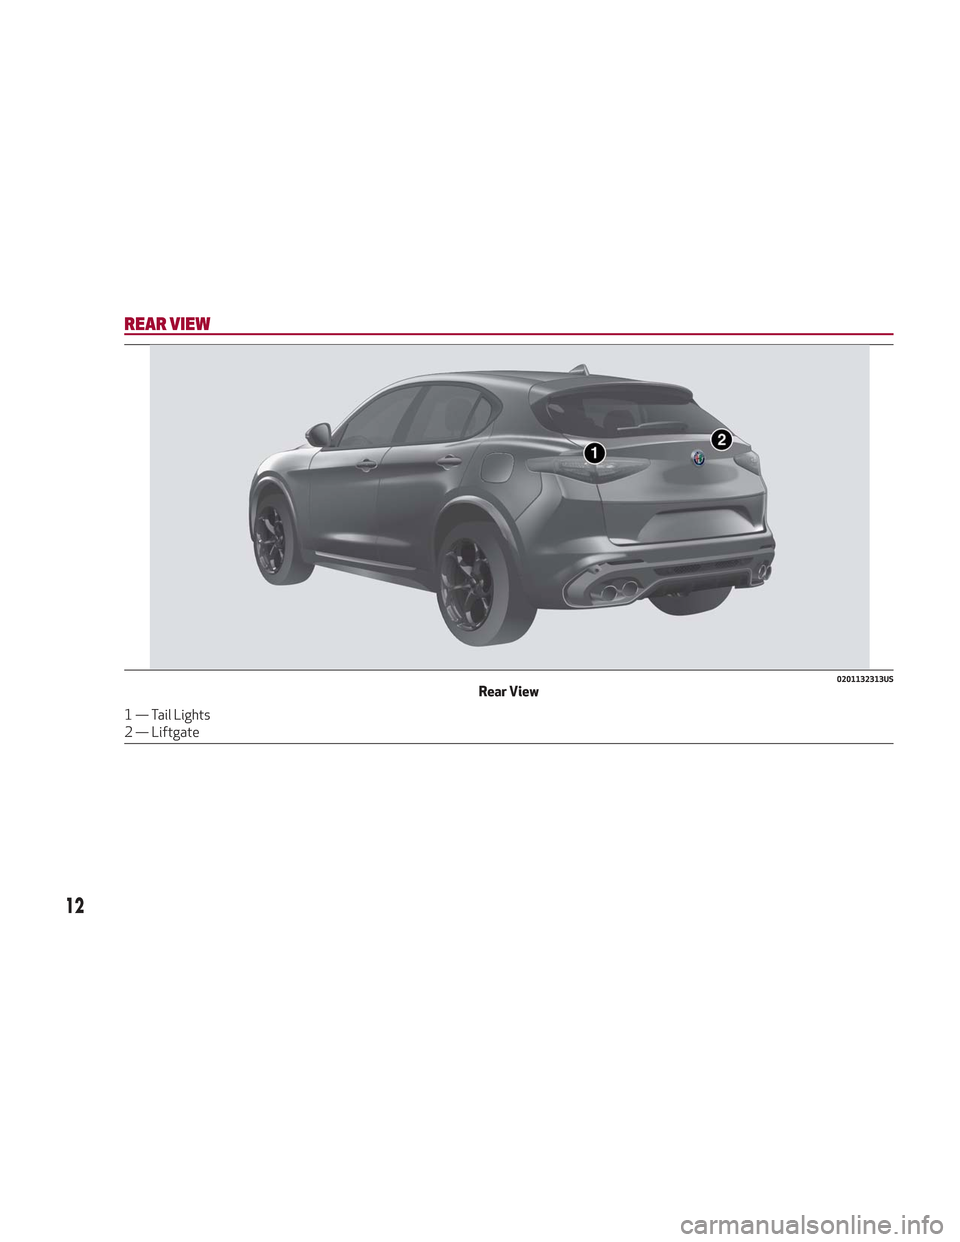 Alfa Romeo Stelvio 2018 User Guide REAR VIEW
0201132313USRear View
1 — Tail Lights
2 — Liftgate
12 